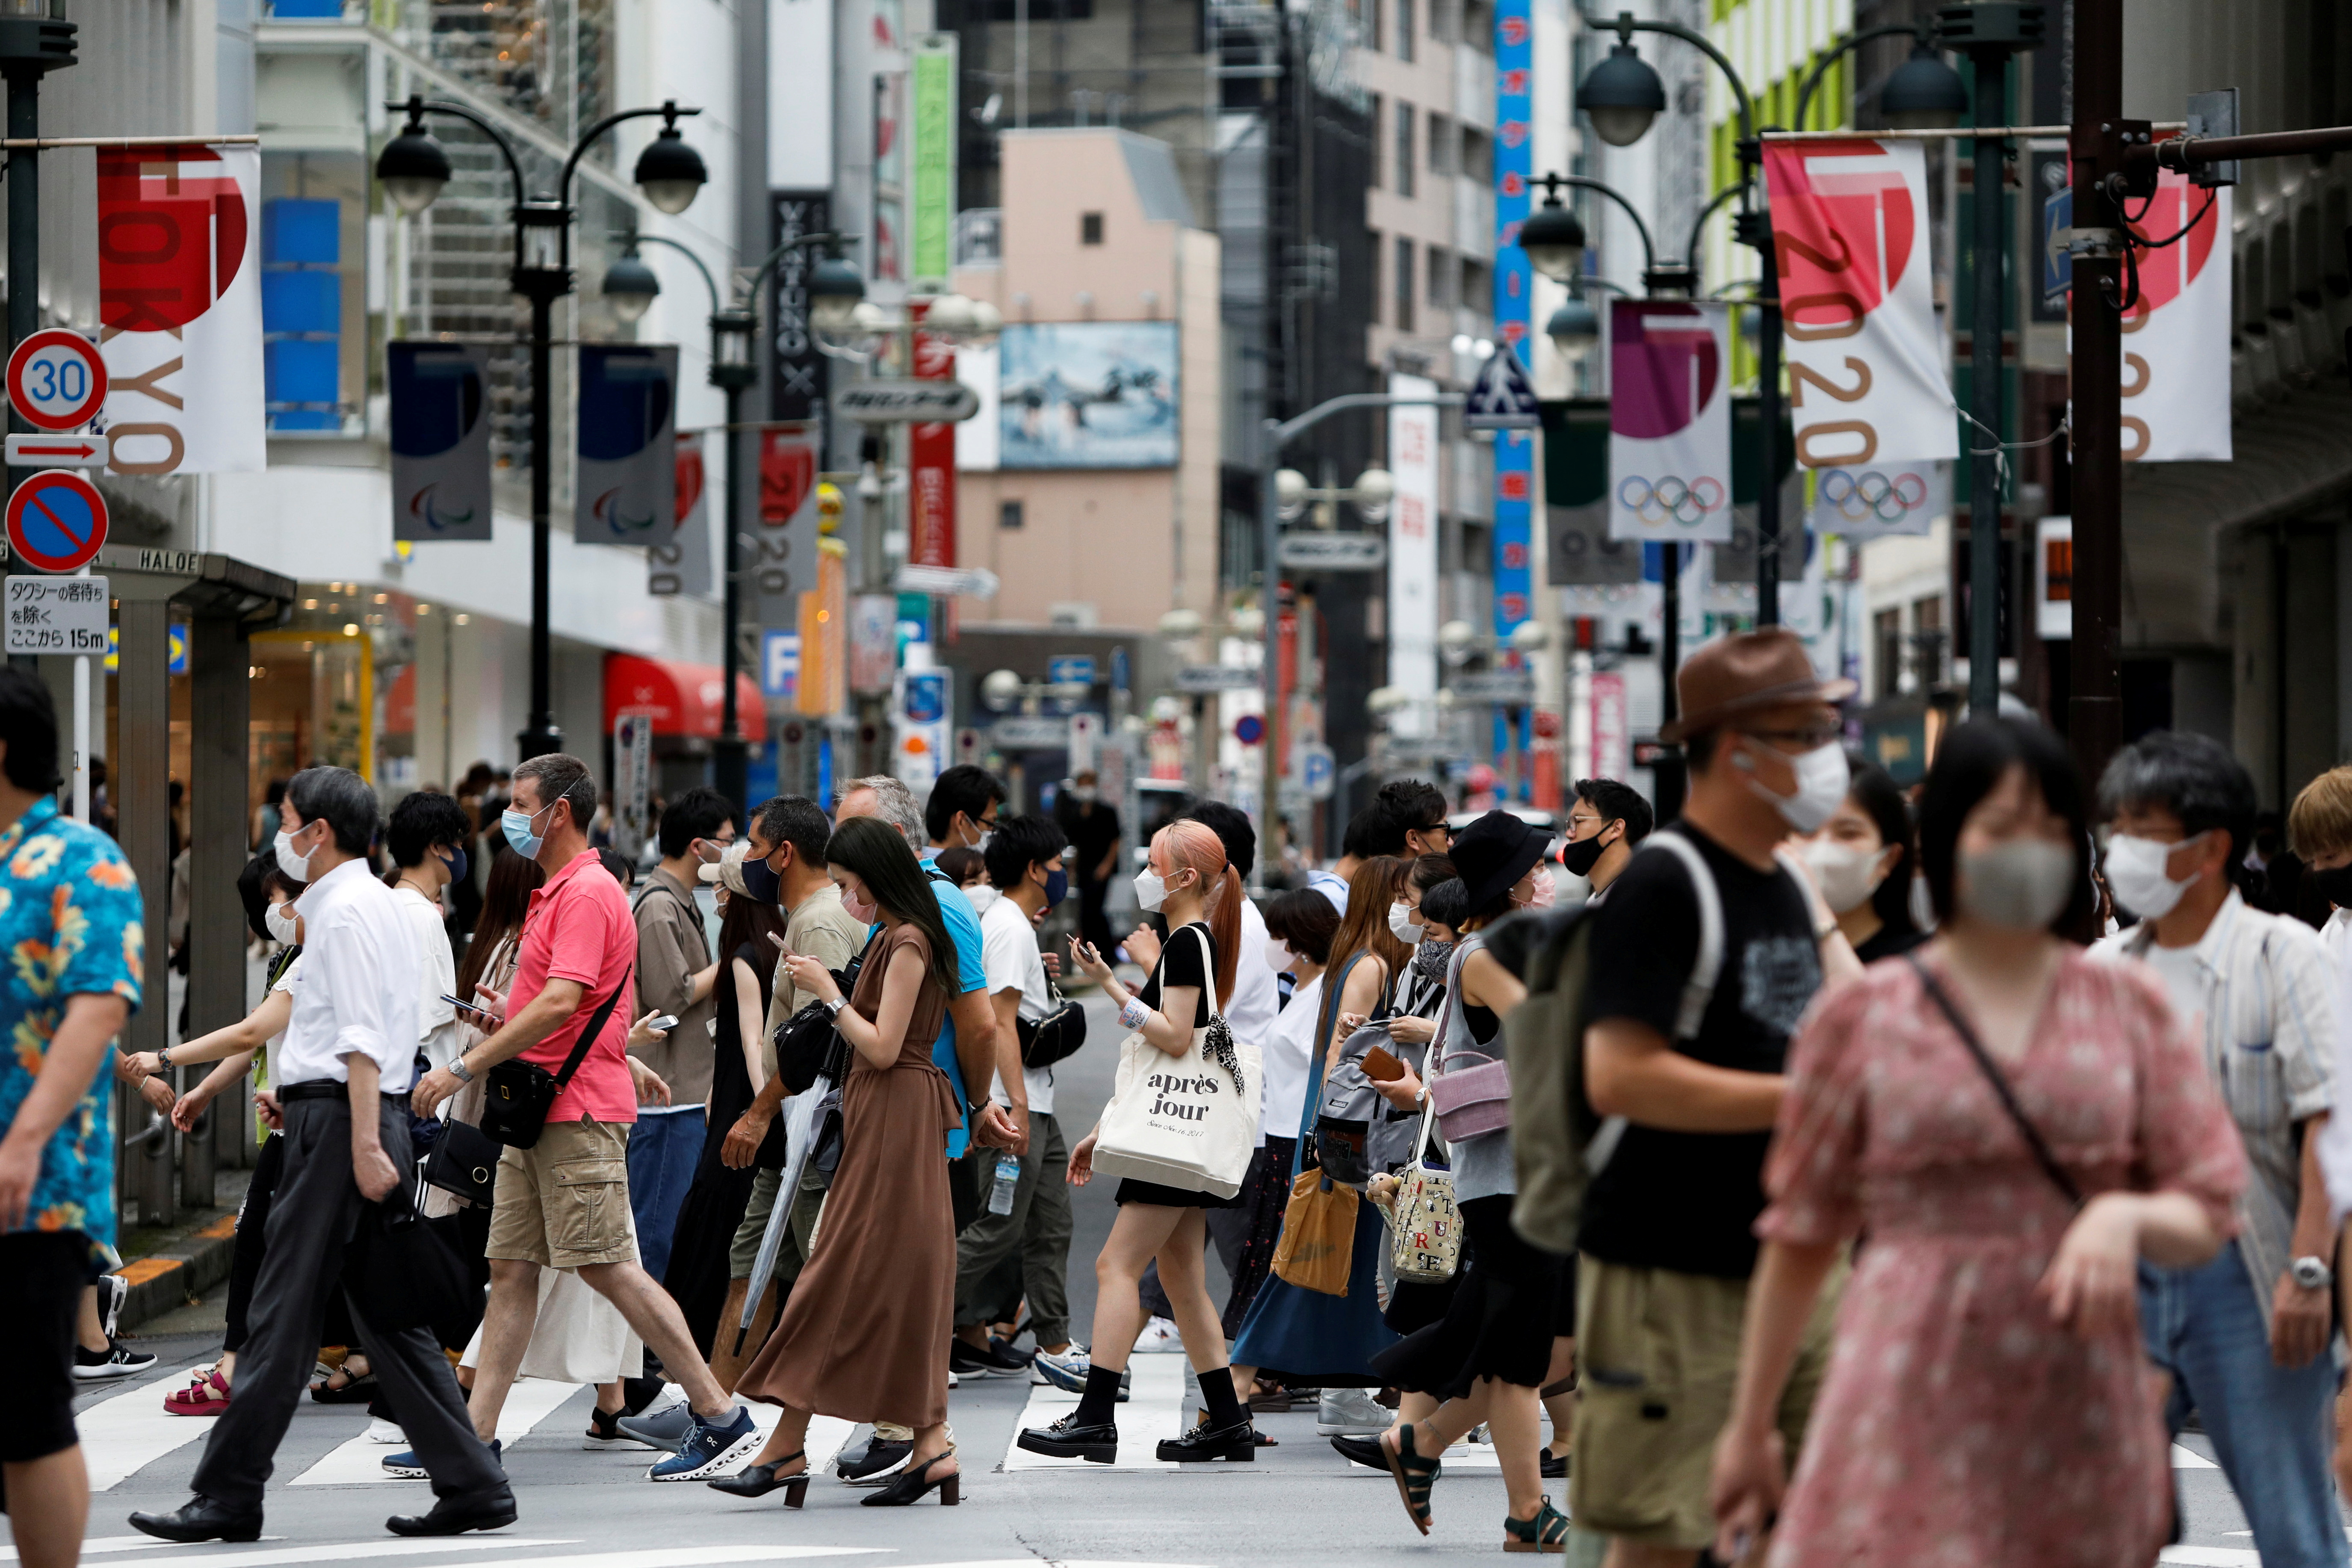 People walk at a crossing in Shibuya shopping area, amid the coronavirus disease (COVID-19) pandemic, in Tokyo